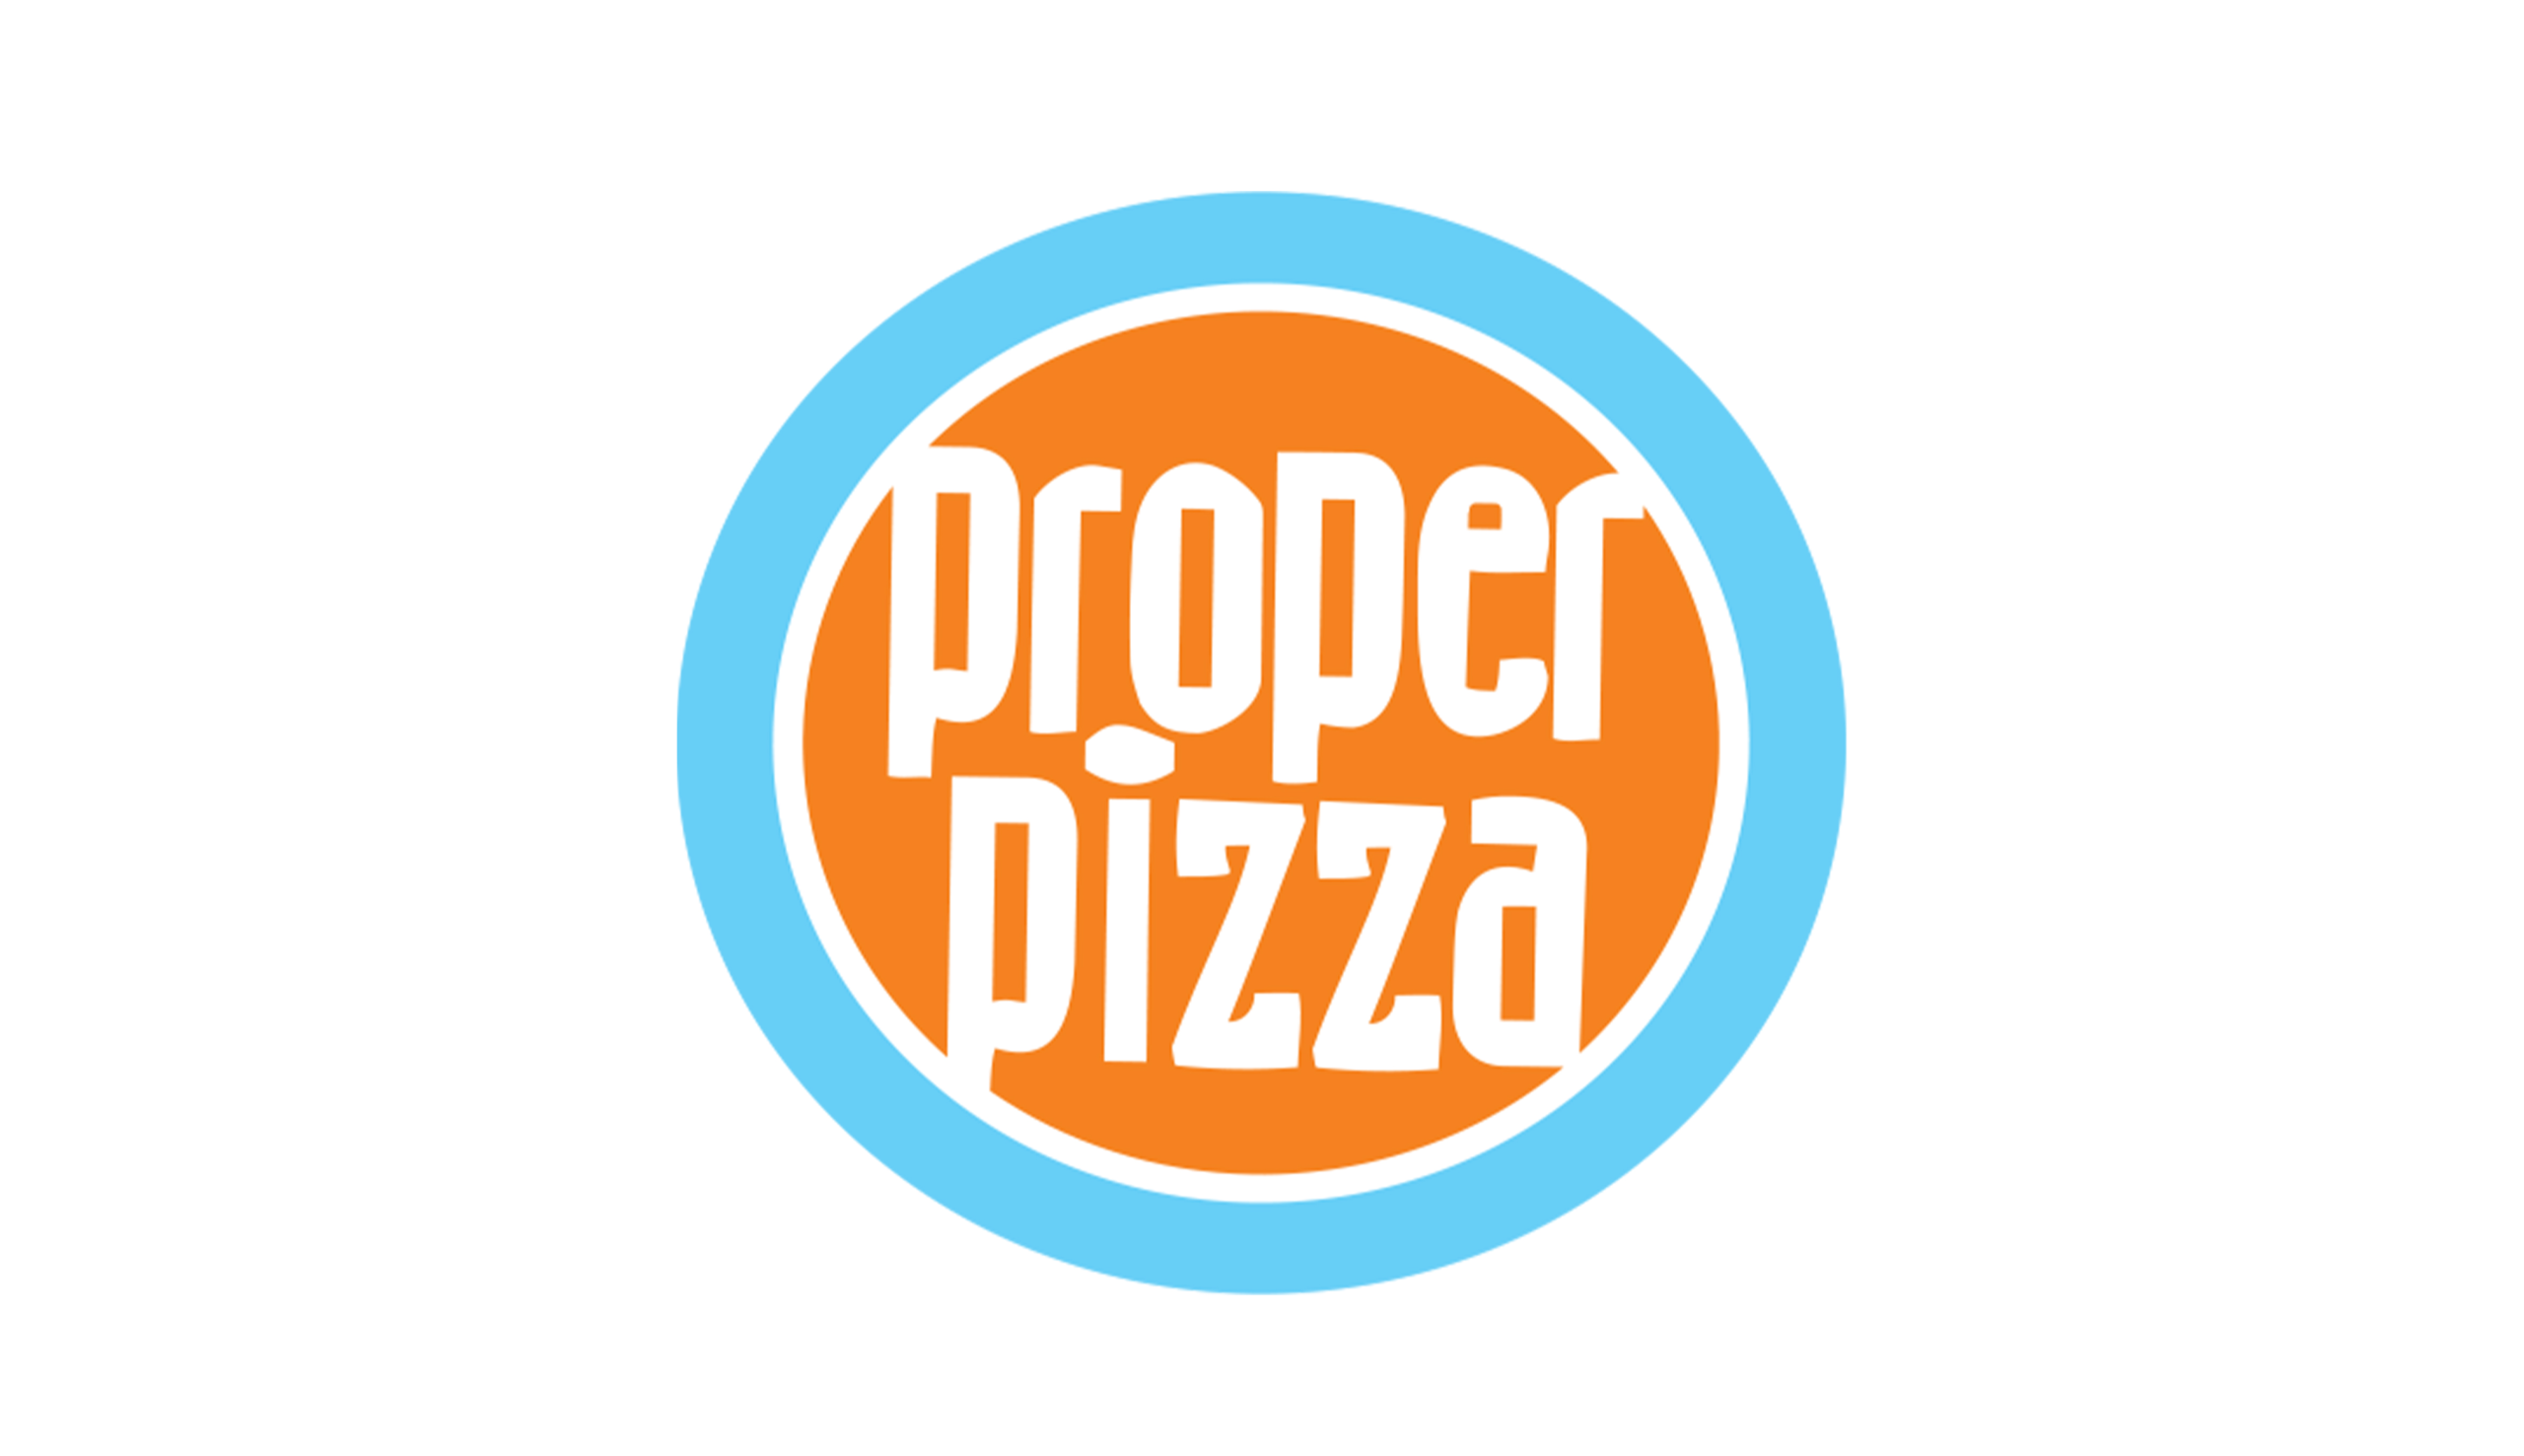 Proper Pizza